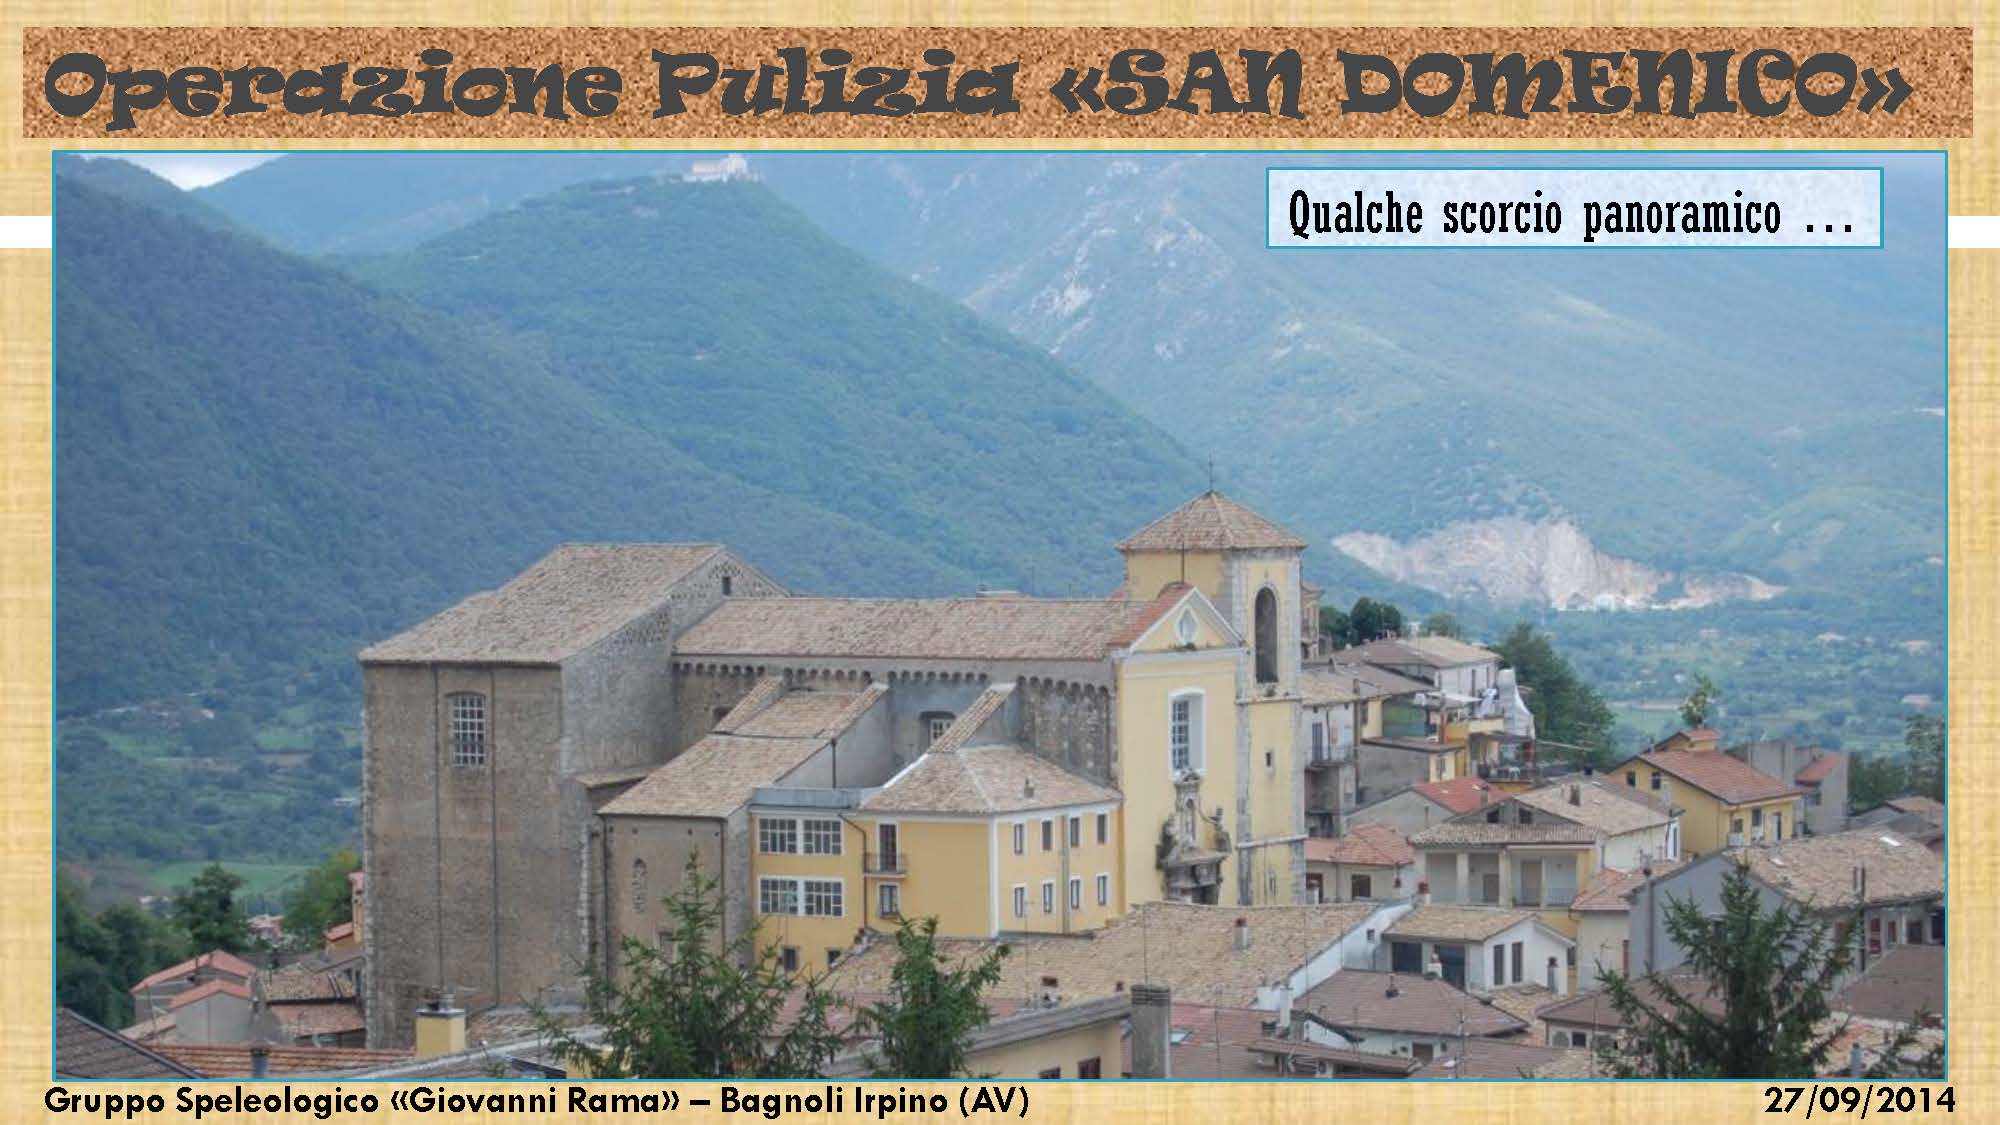 Bagnoli-Pulizia-San-Domenico-2014_Pagina_24